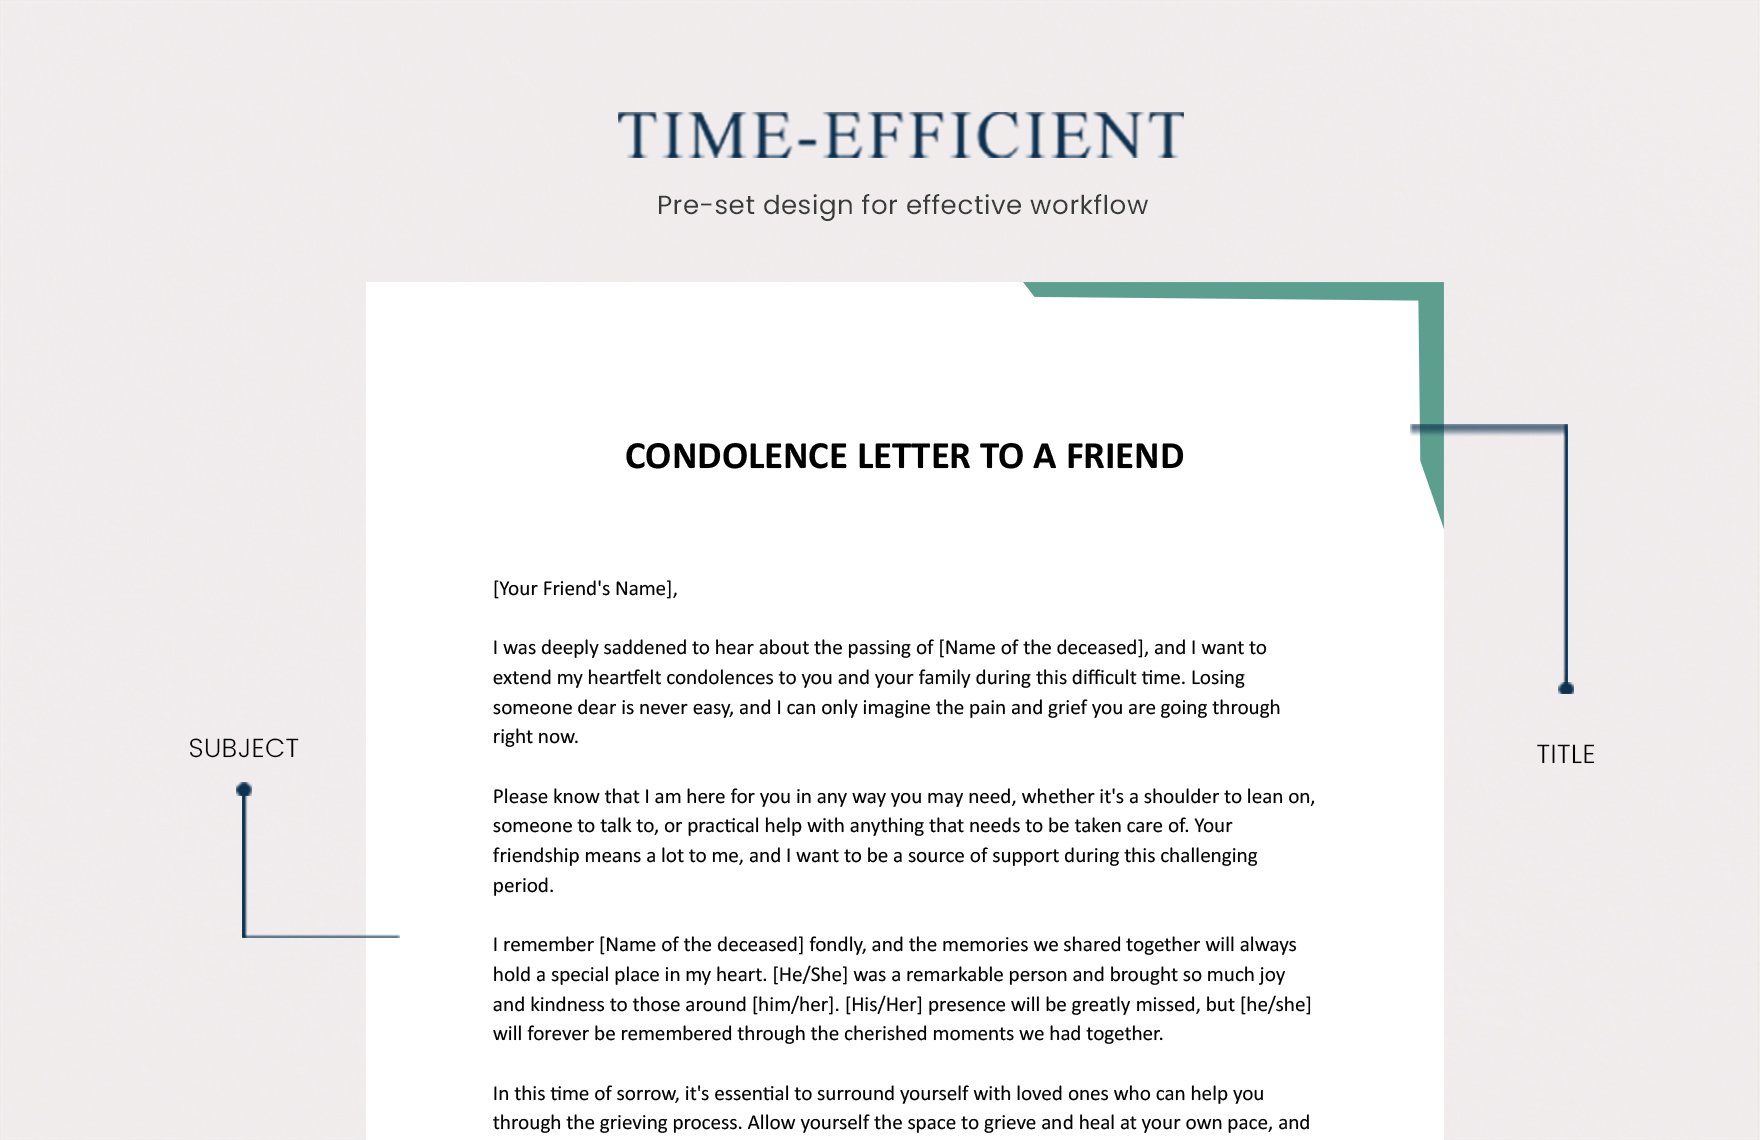 Condolence Letter To A Friend